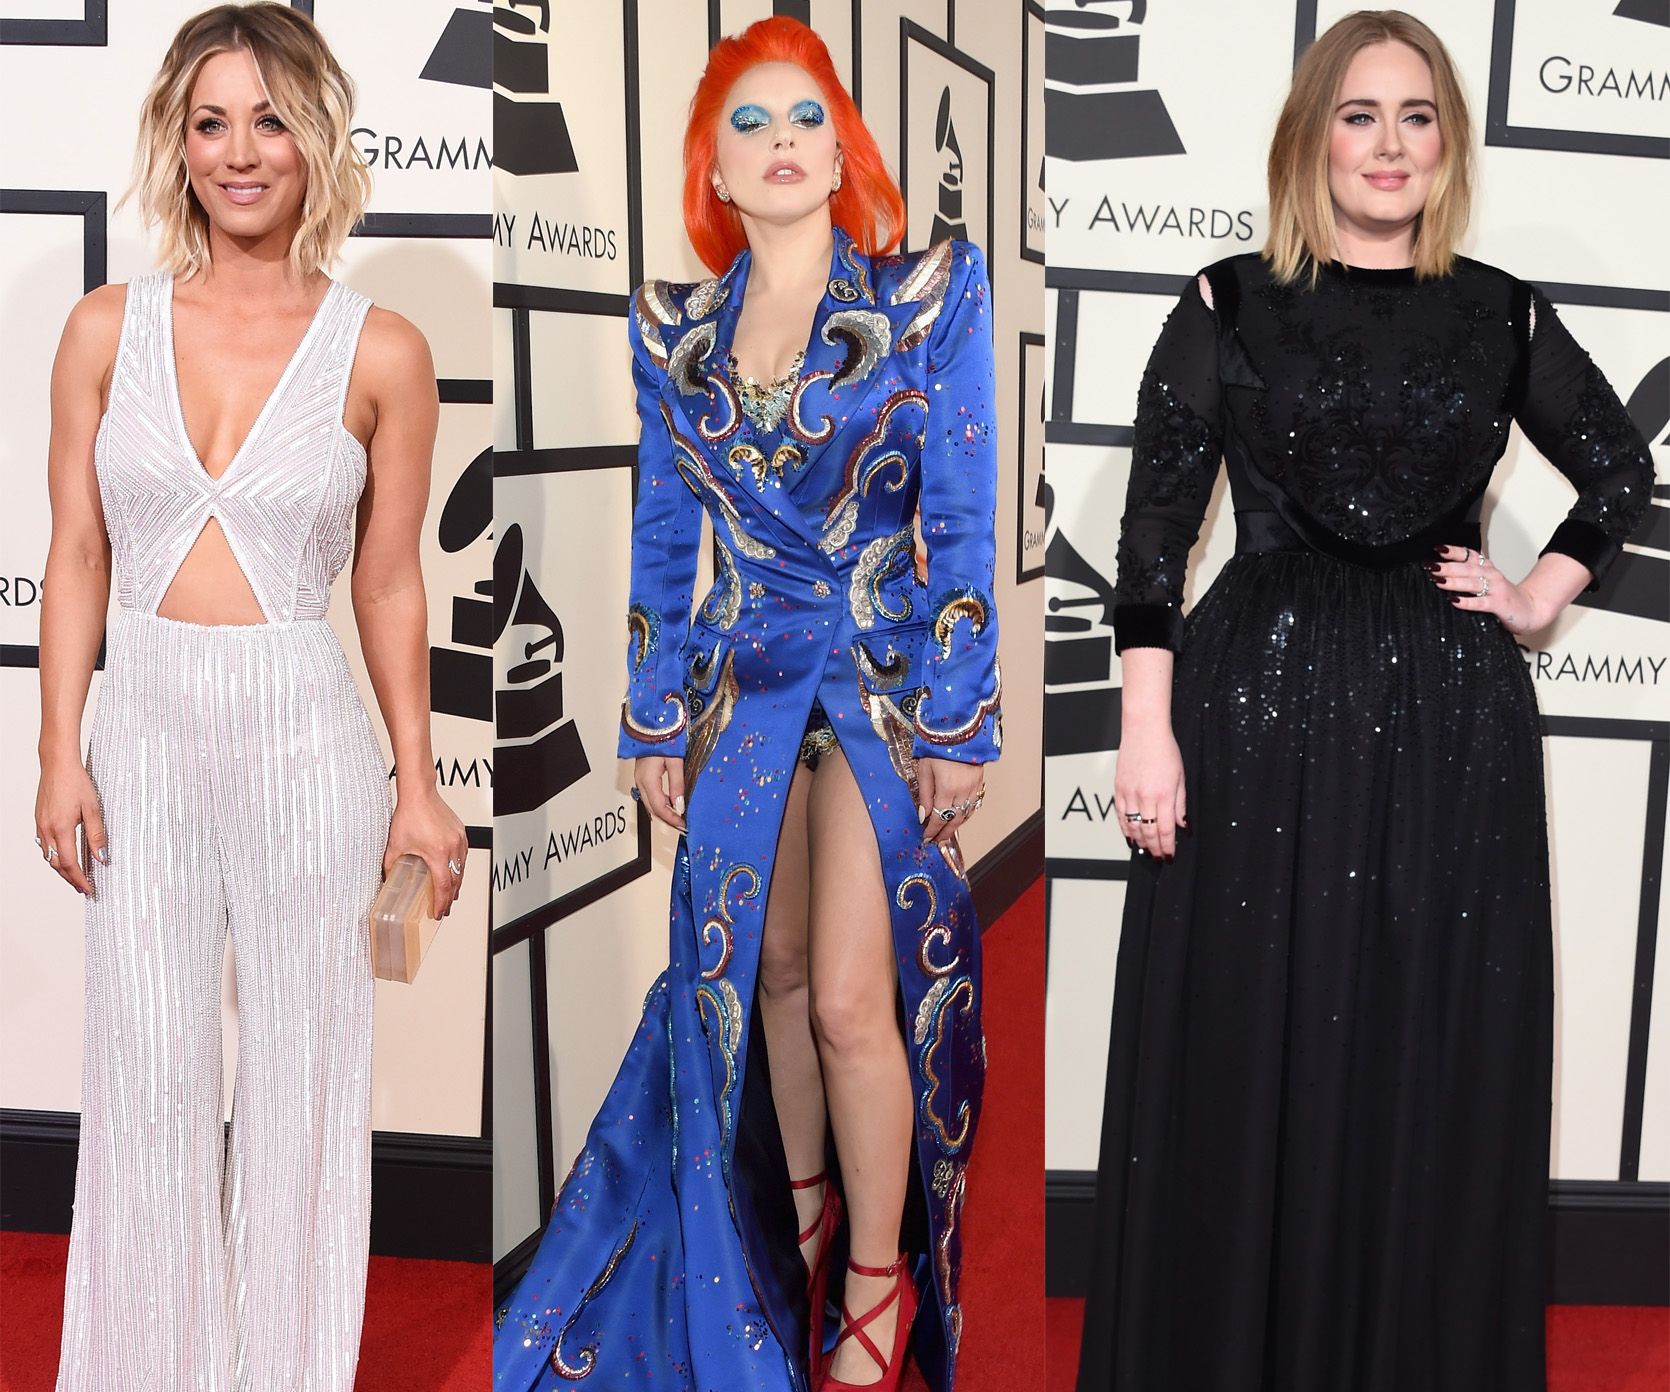 The 2016 Grammy Awards Red Carpet